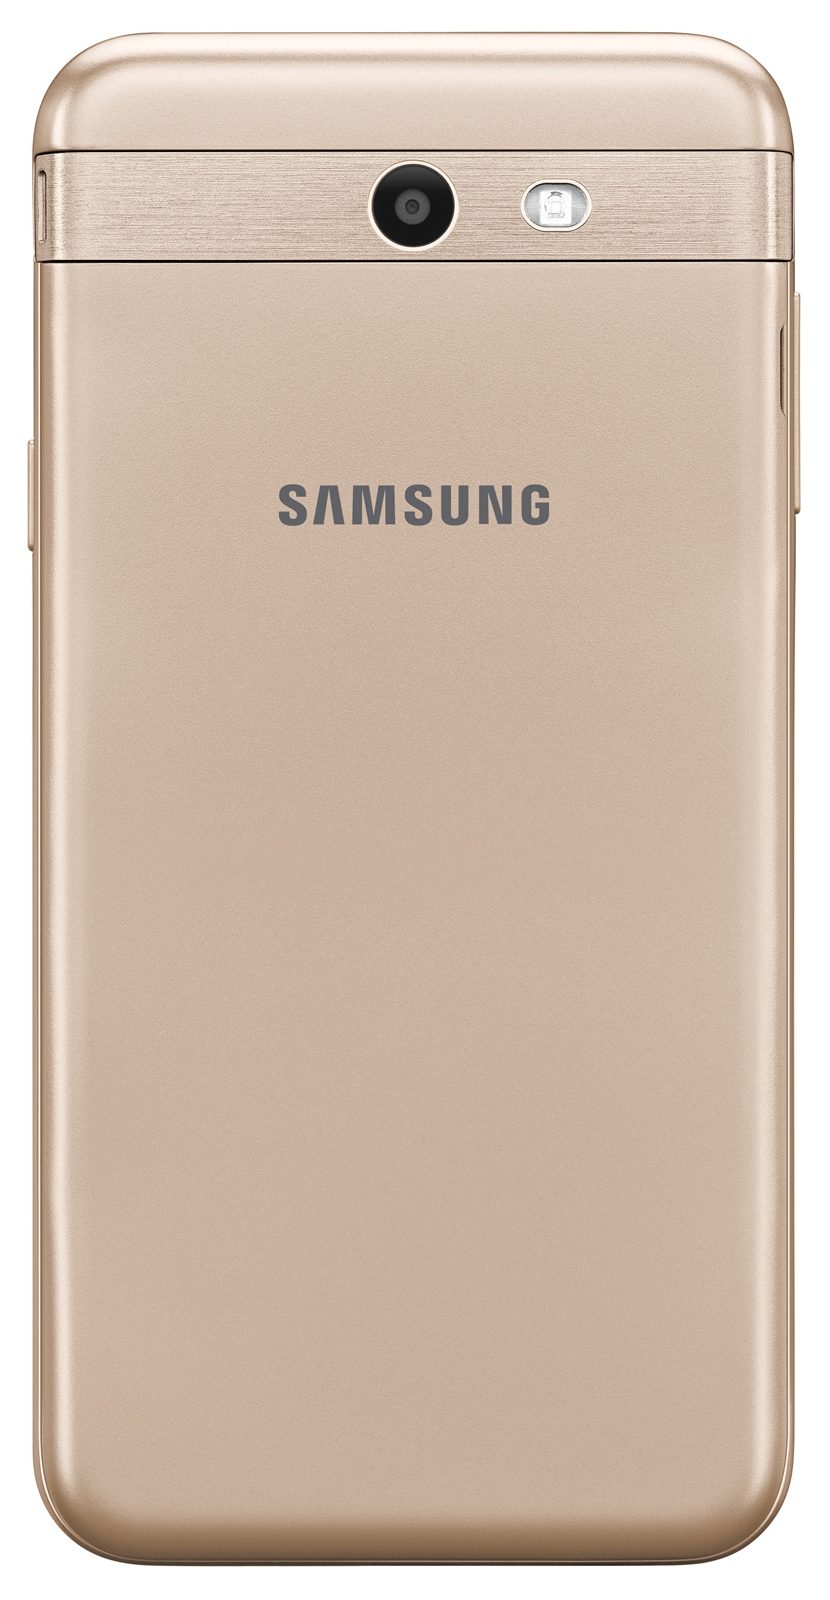 Galaxy J7 Prime T Mobile Phones Sm J727tzdatmo Samsung Us